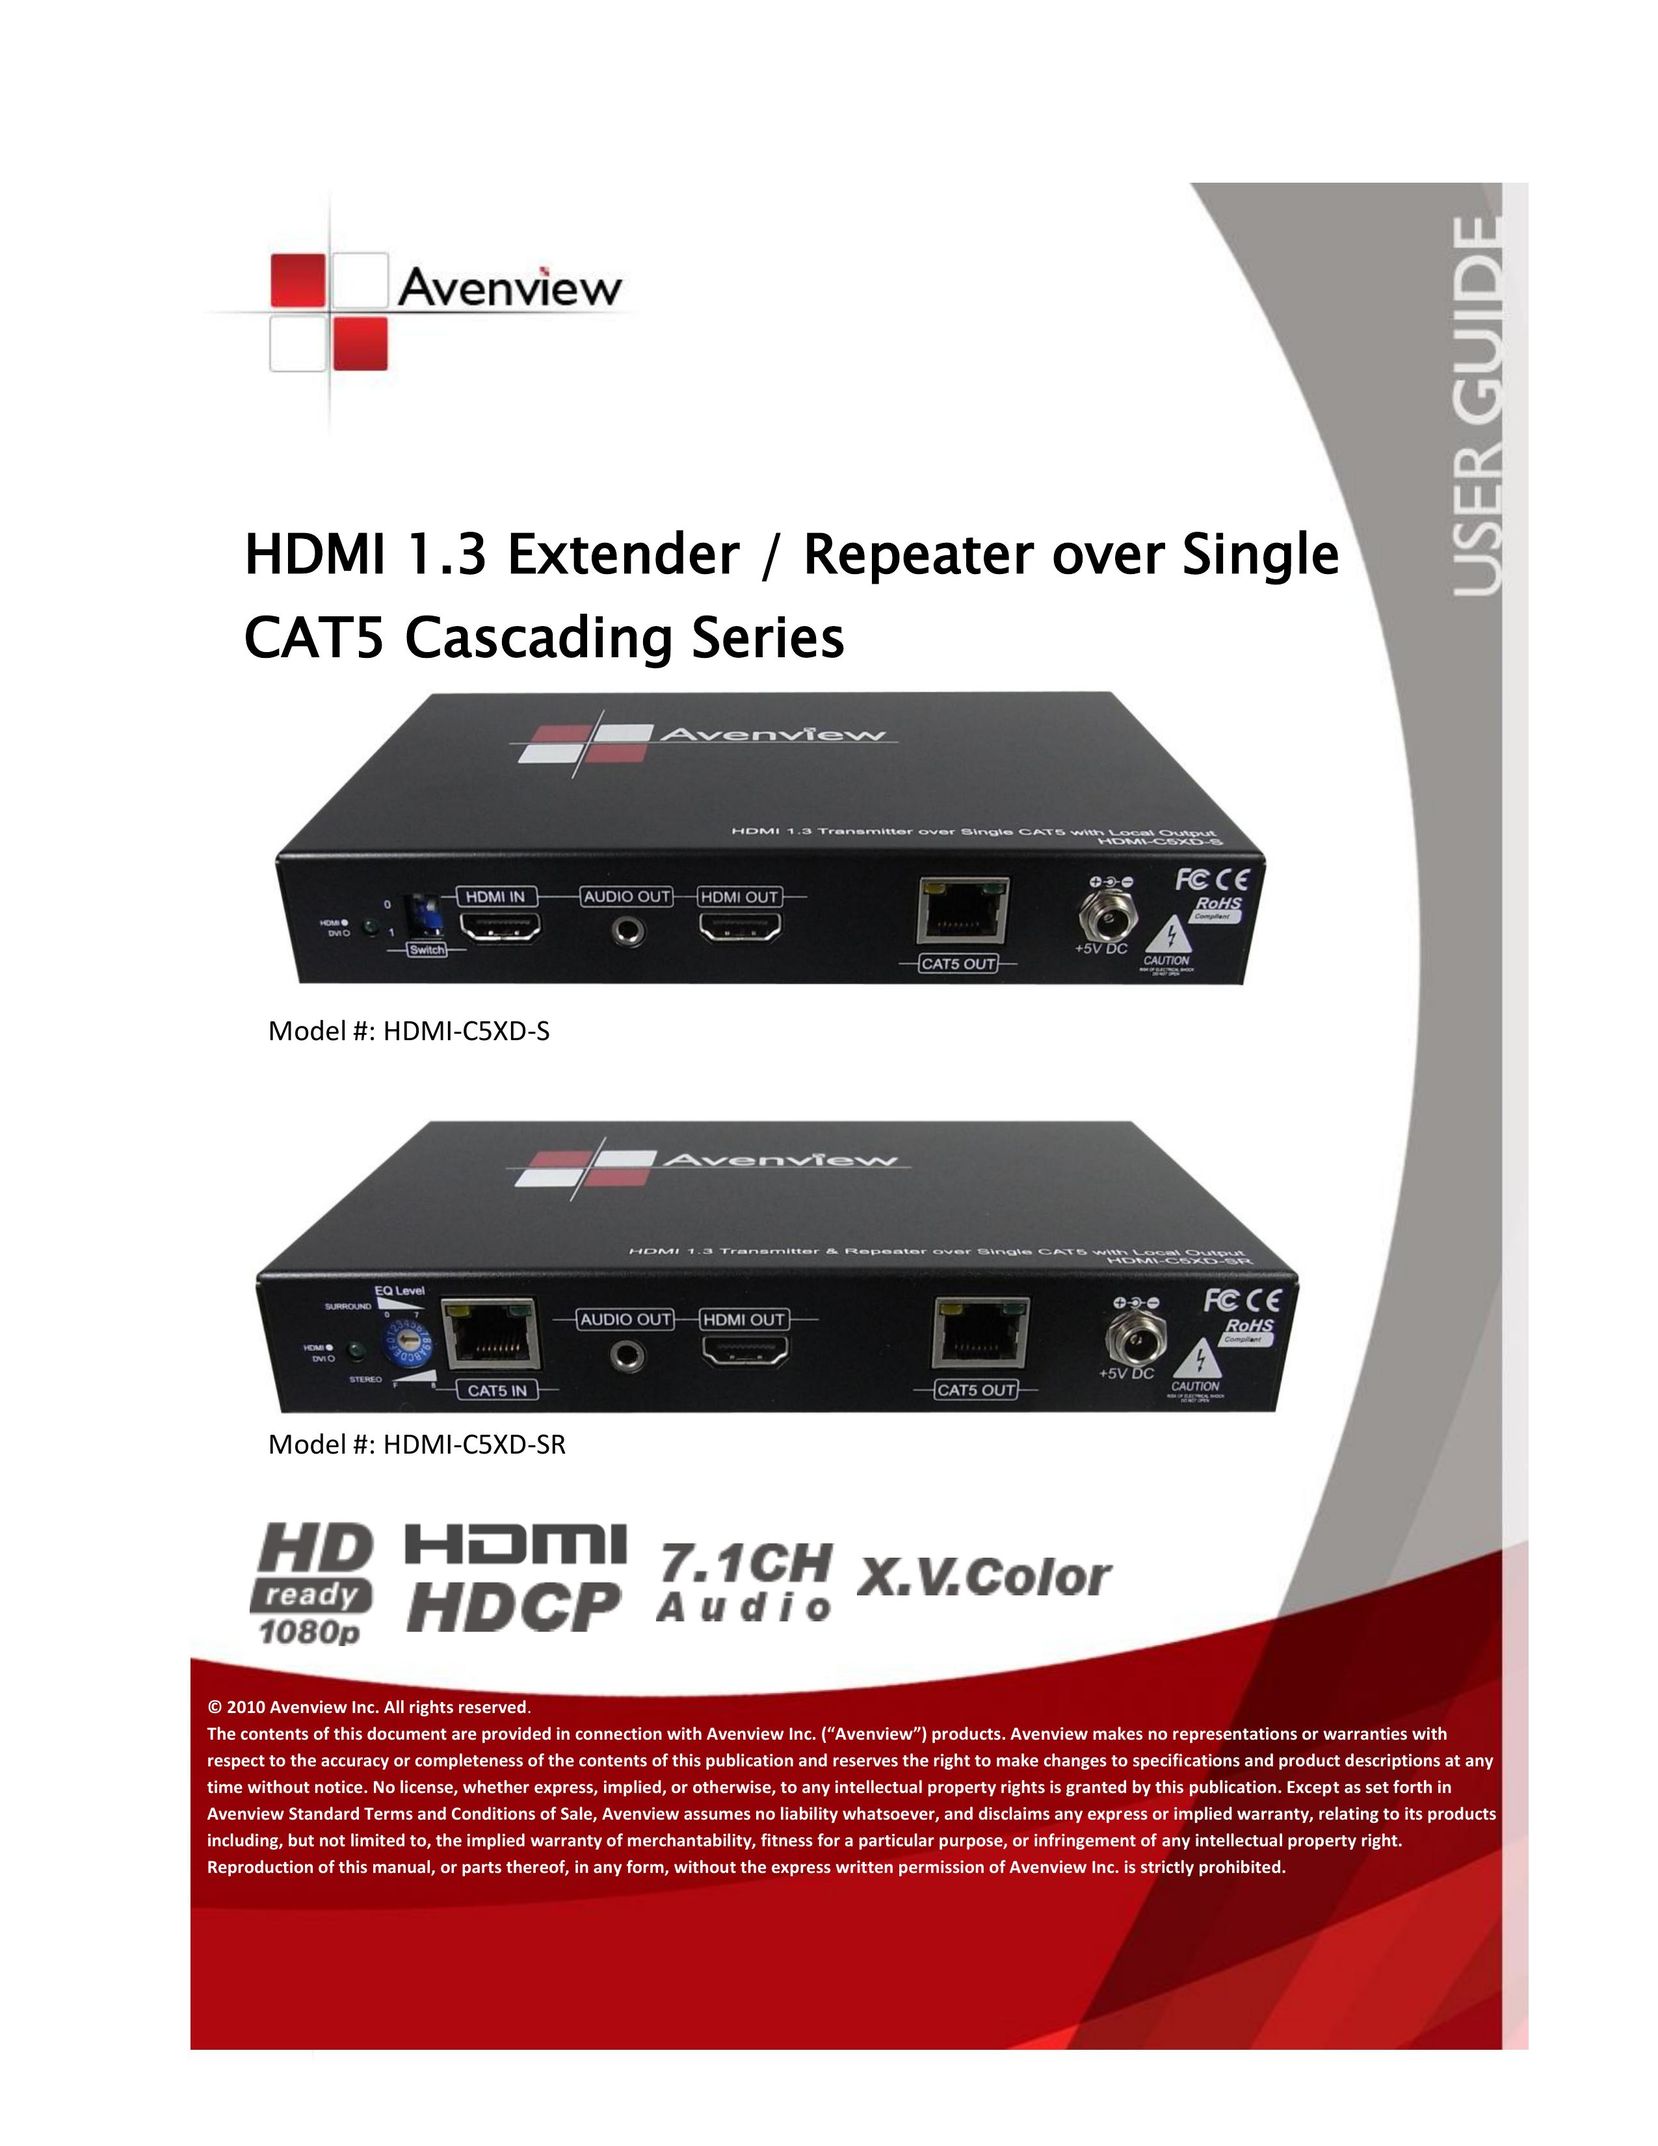 Avenview HDMI-C5XD-SR TV Cables User Manual